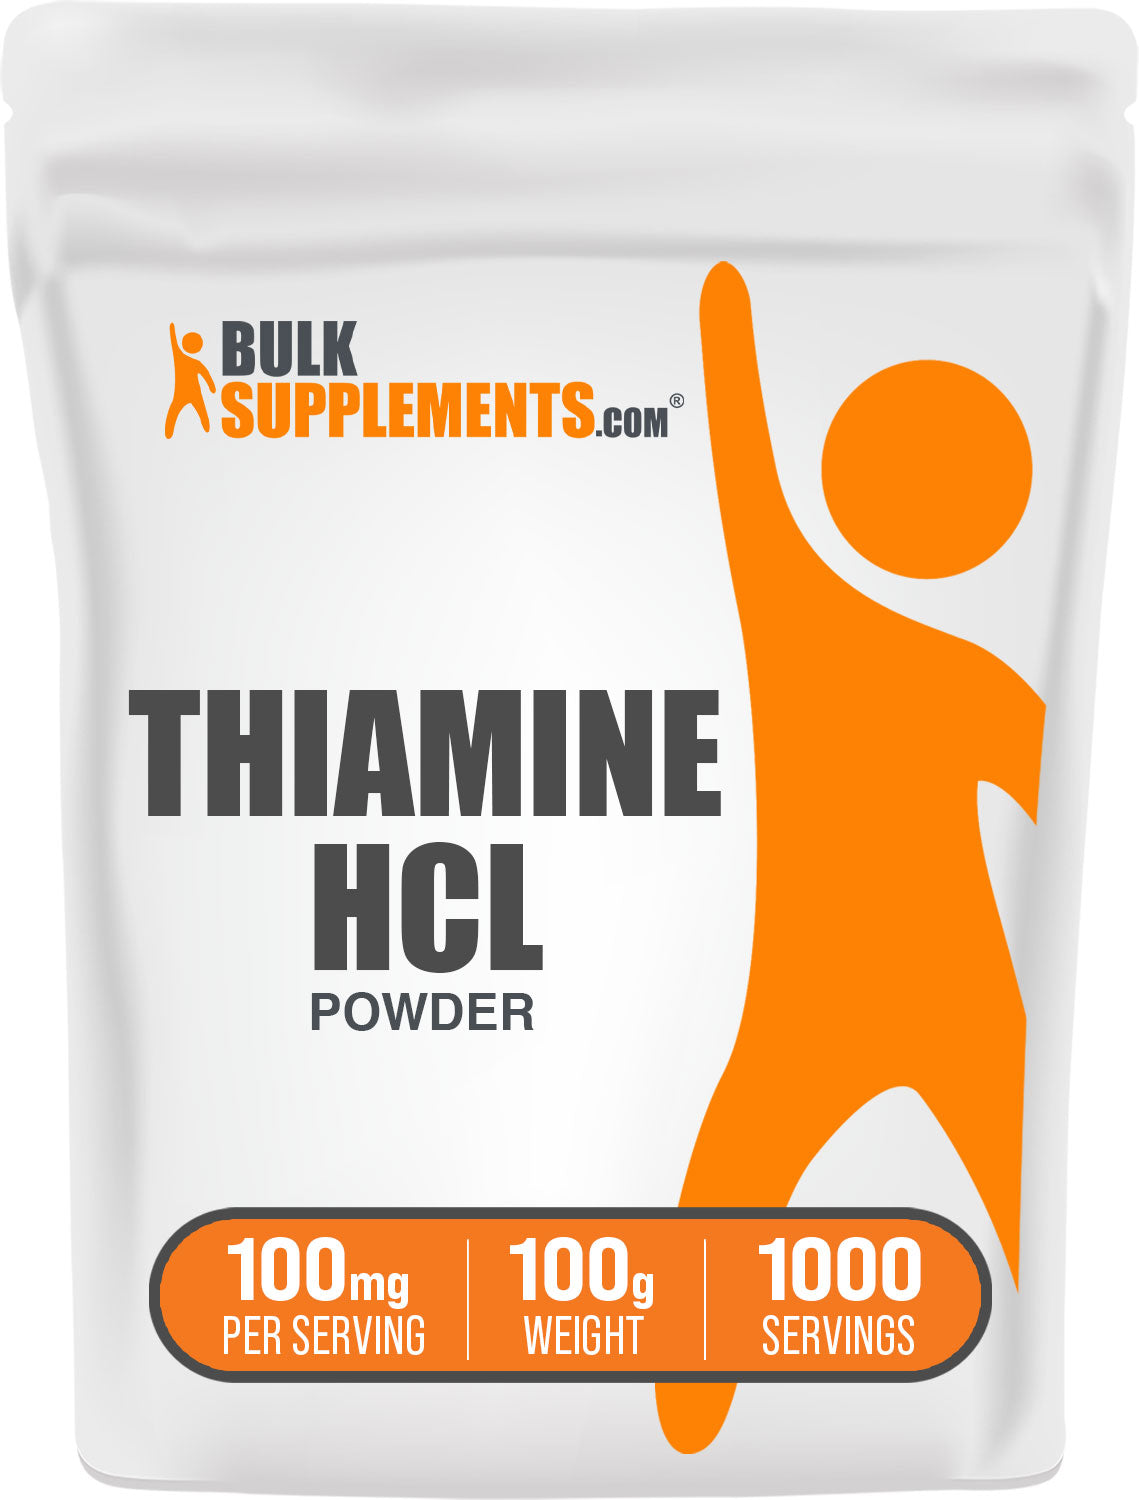 BulkSupplements Thiamine HCl Powder 100g bag